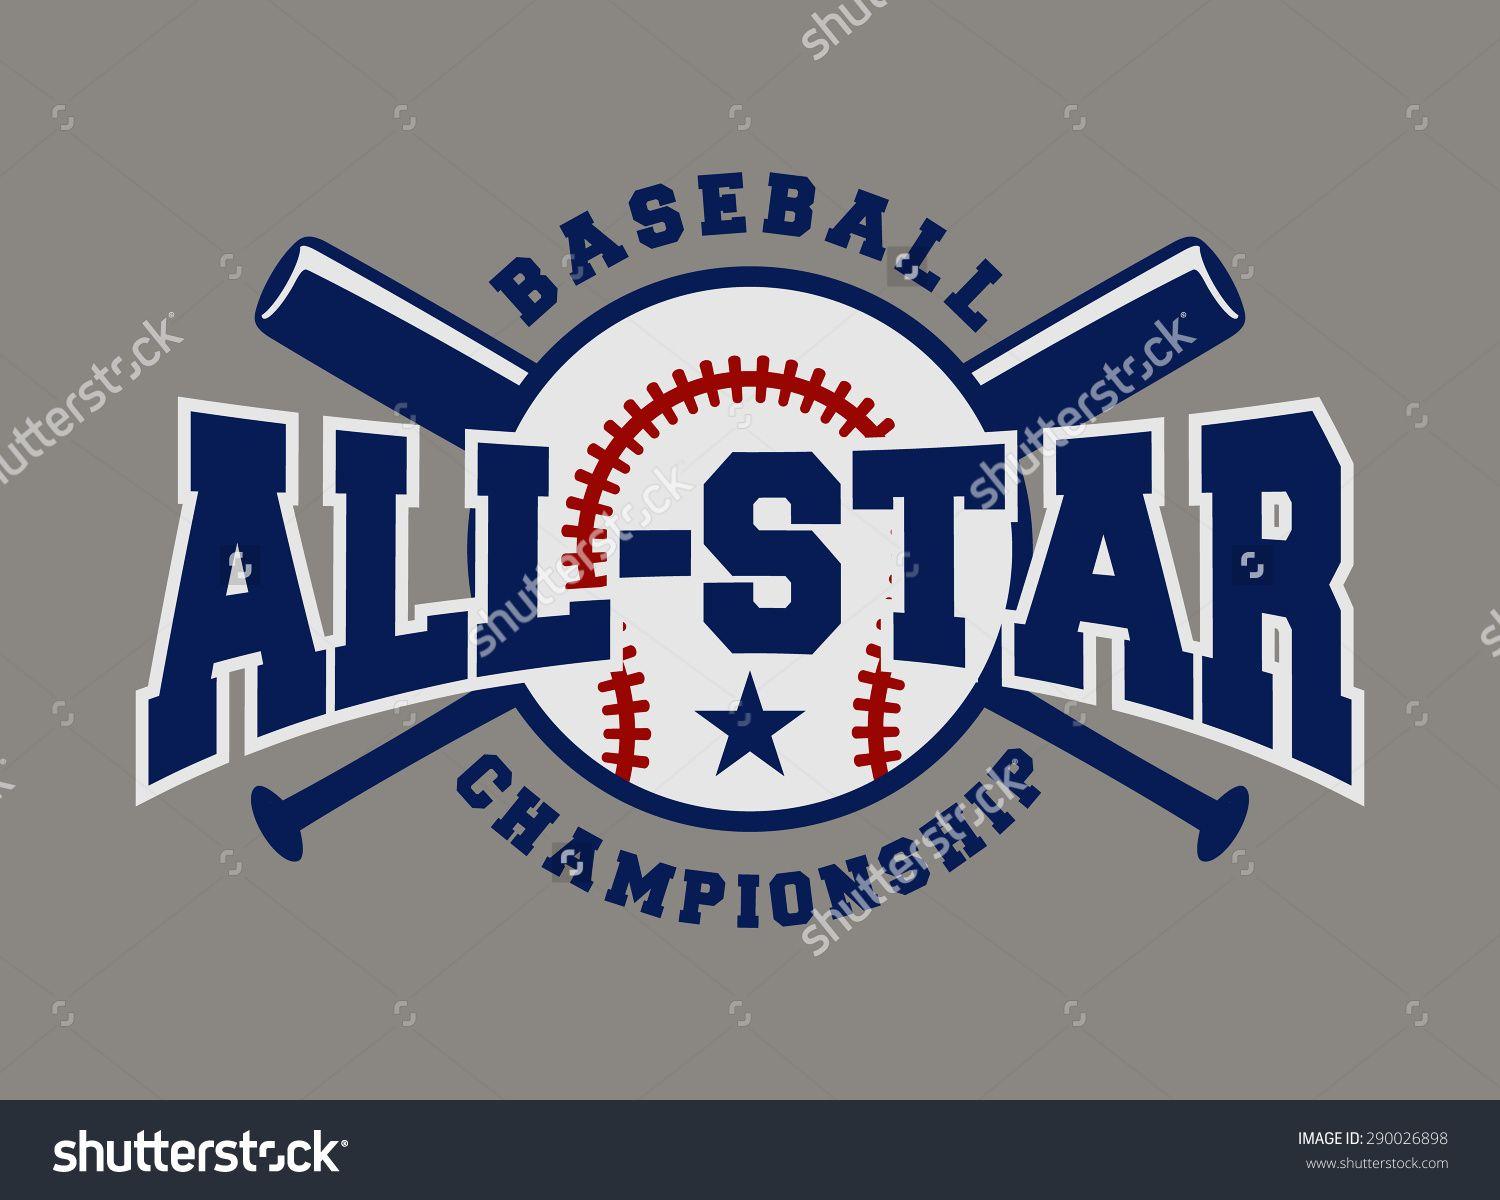 Softball Base Logo - softball logo design templates - Google Search | Sports branding and ...